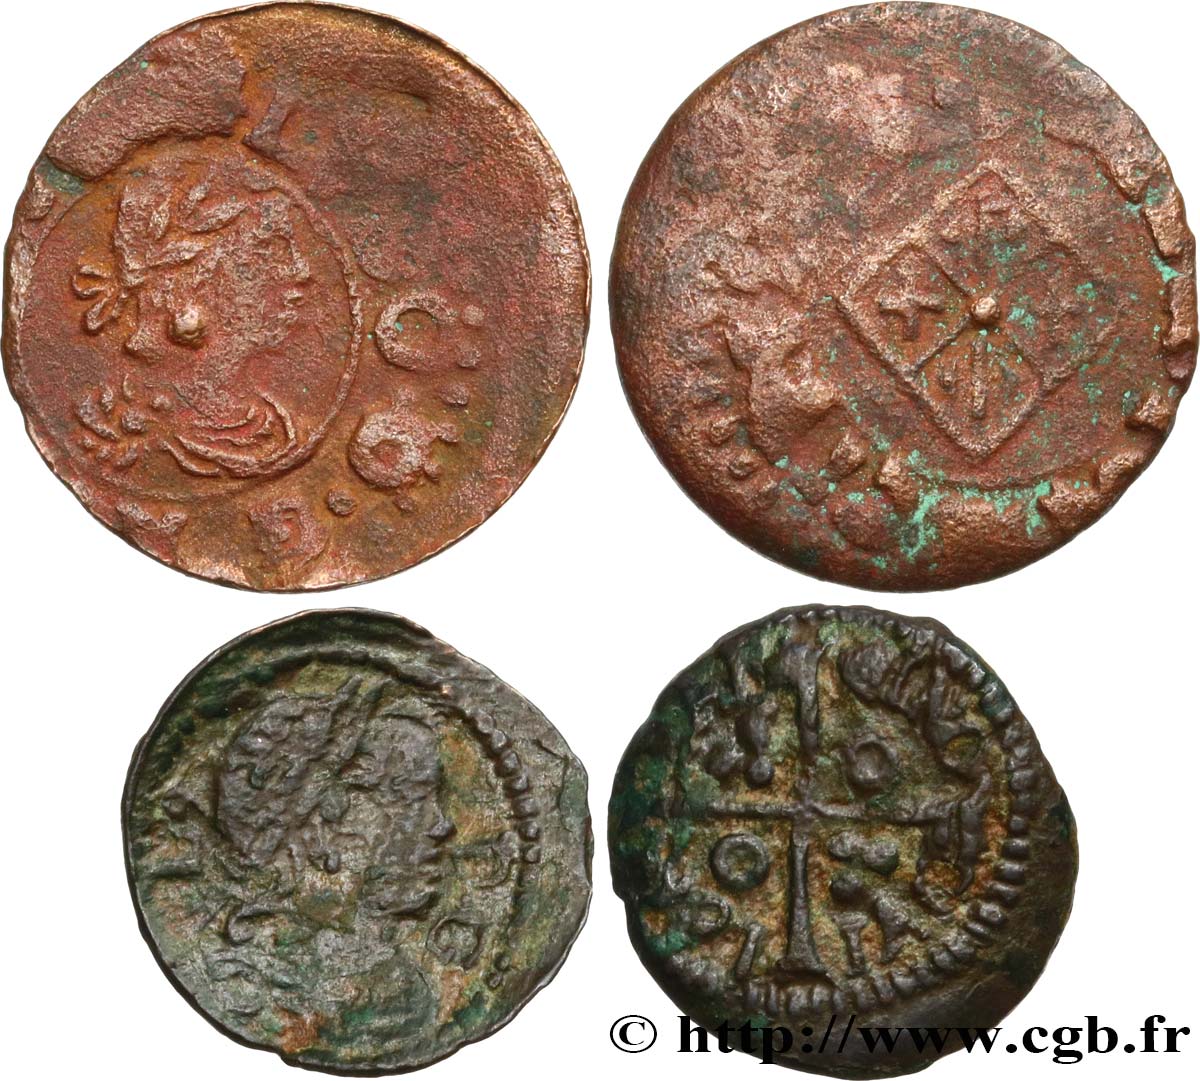 SPANIA - PRINCIPAUTY OF CATALONIA - LOUIS XIII Lot de 2 monnaies royales n.d. Ateliers divers MB